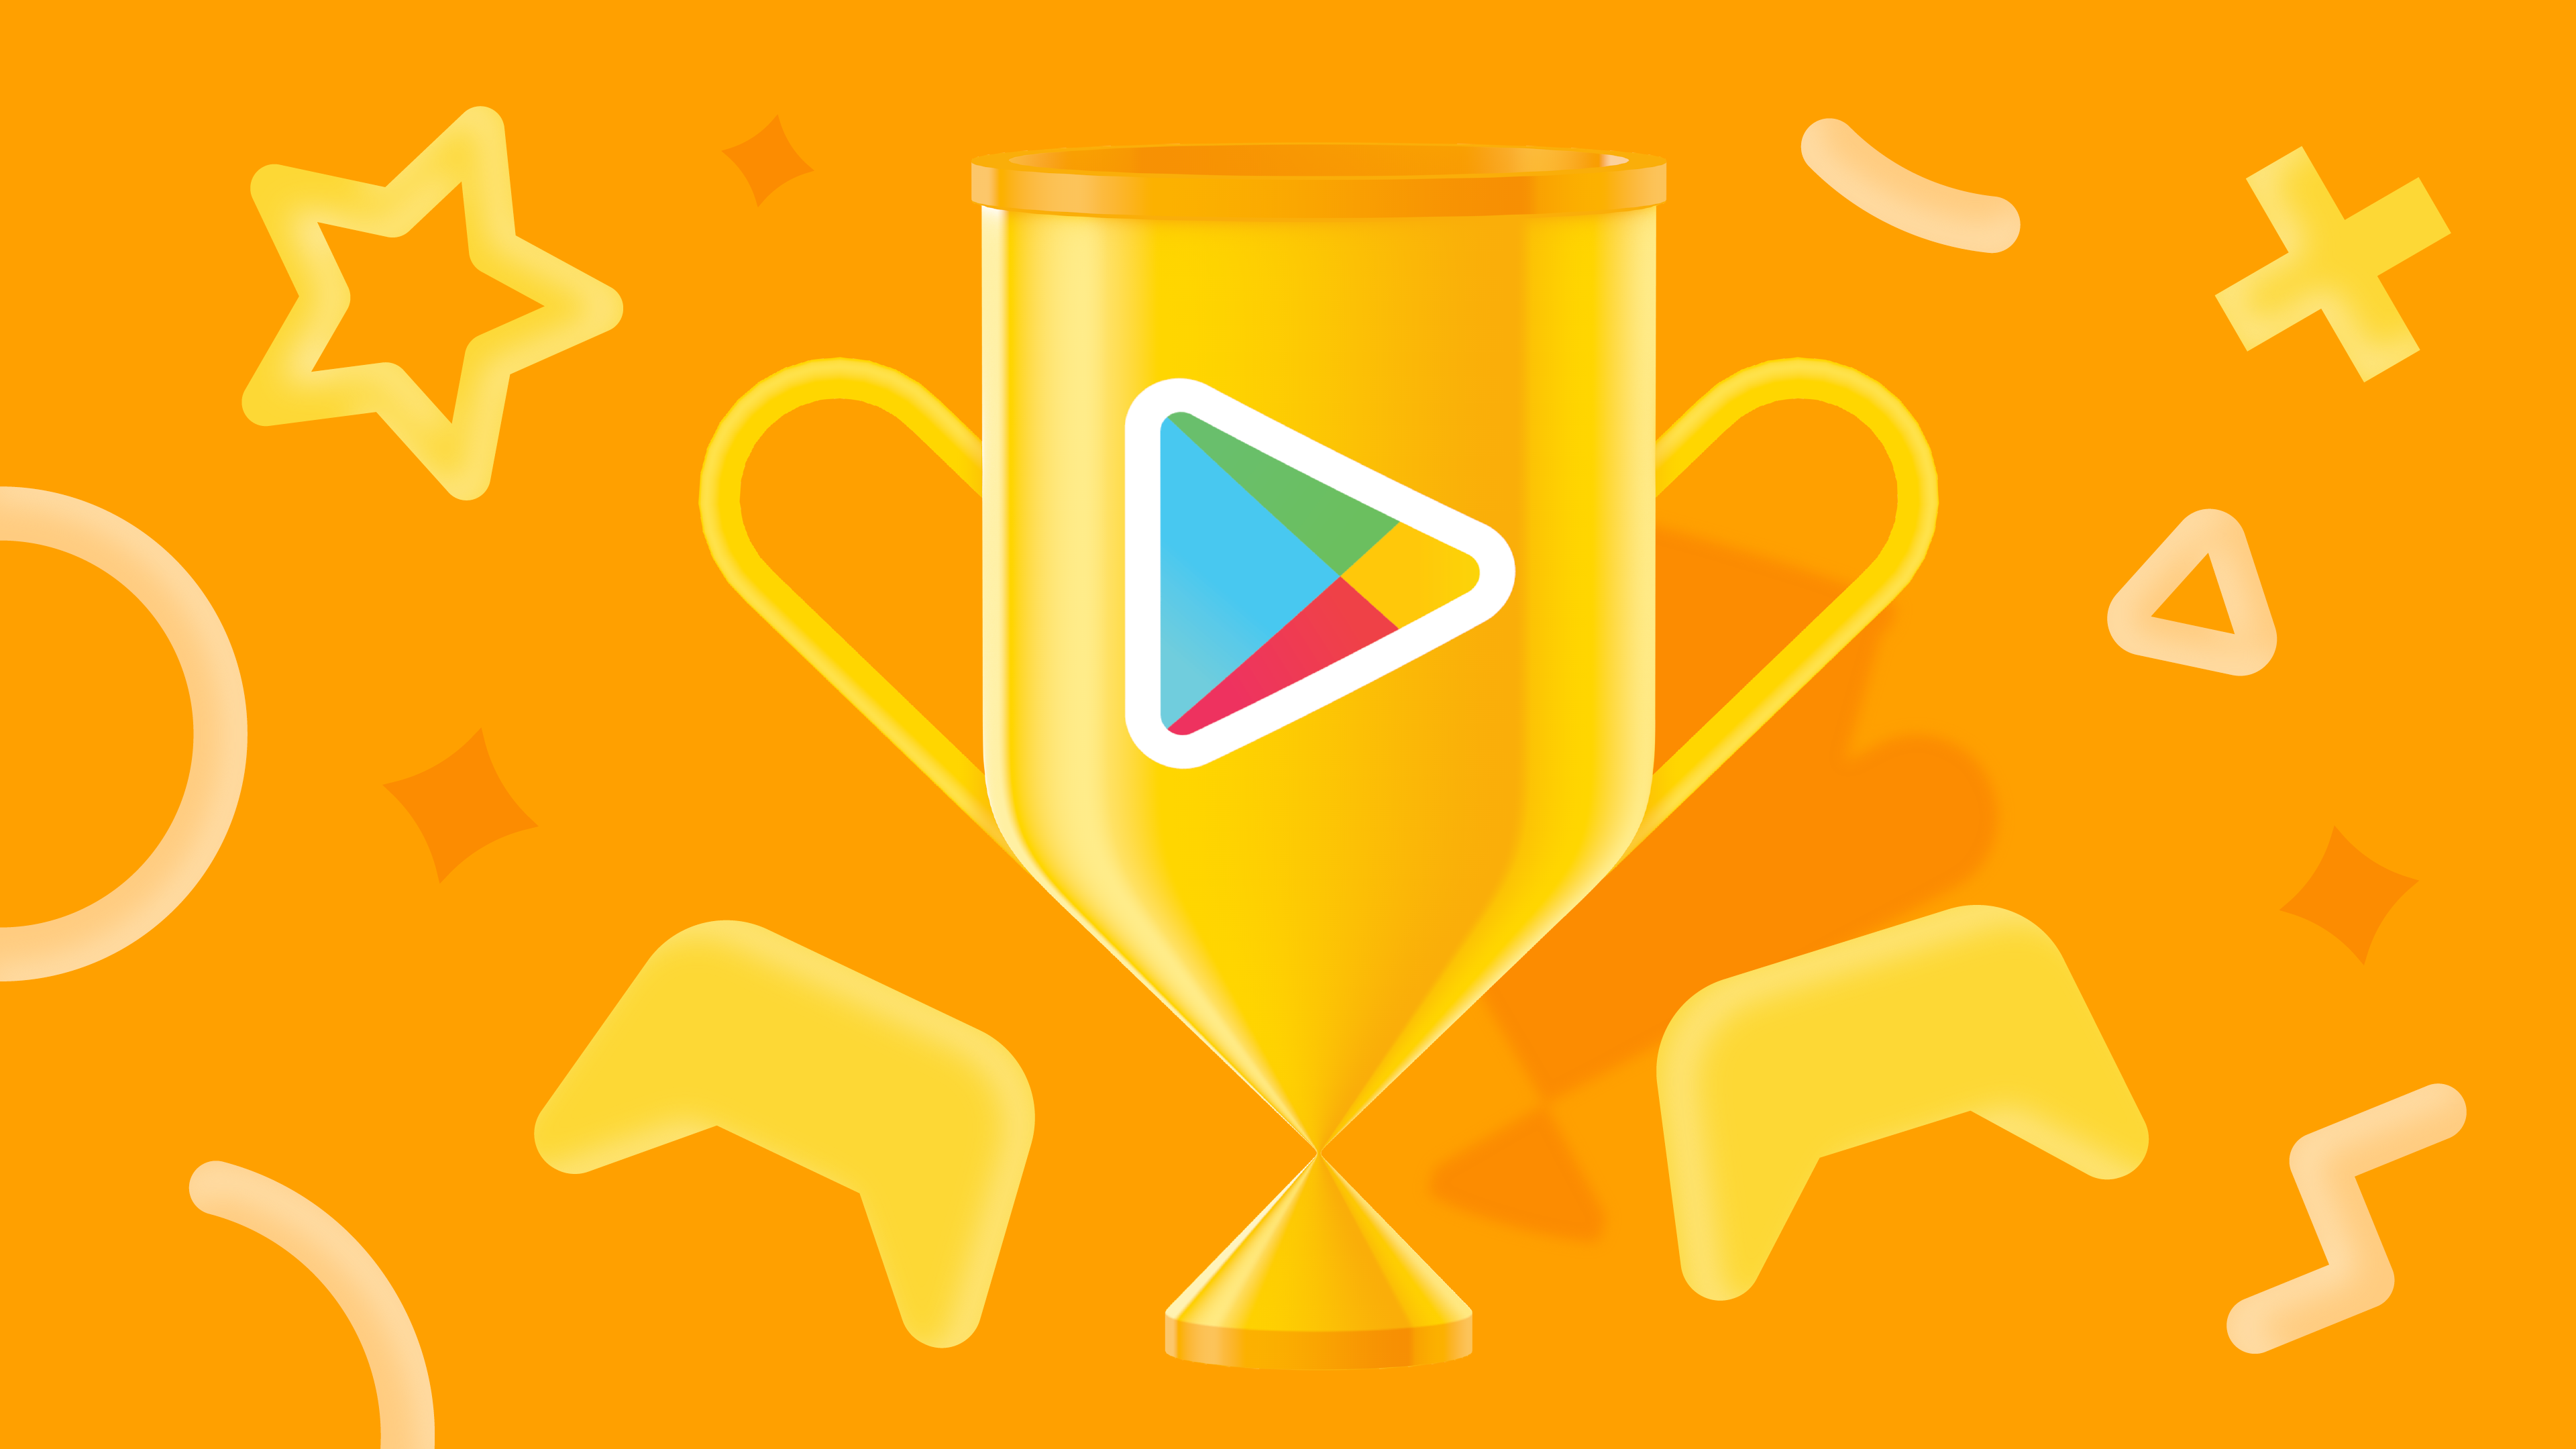 BestAllGames - online games – Apps on Google Play